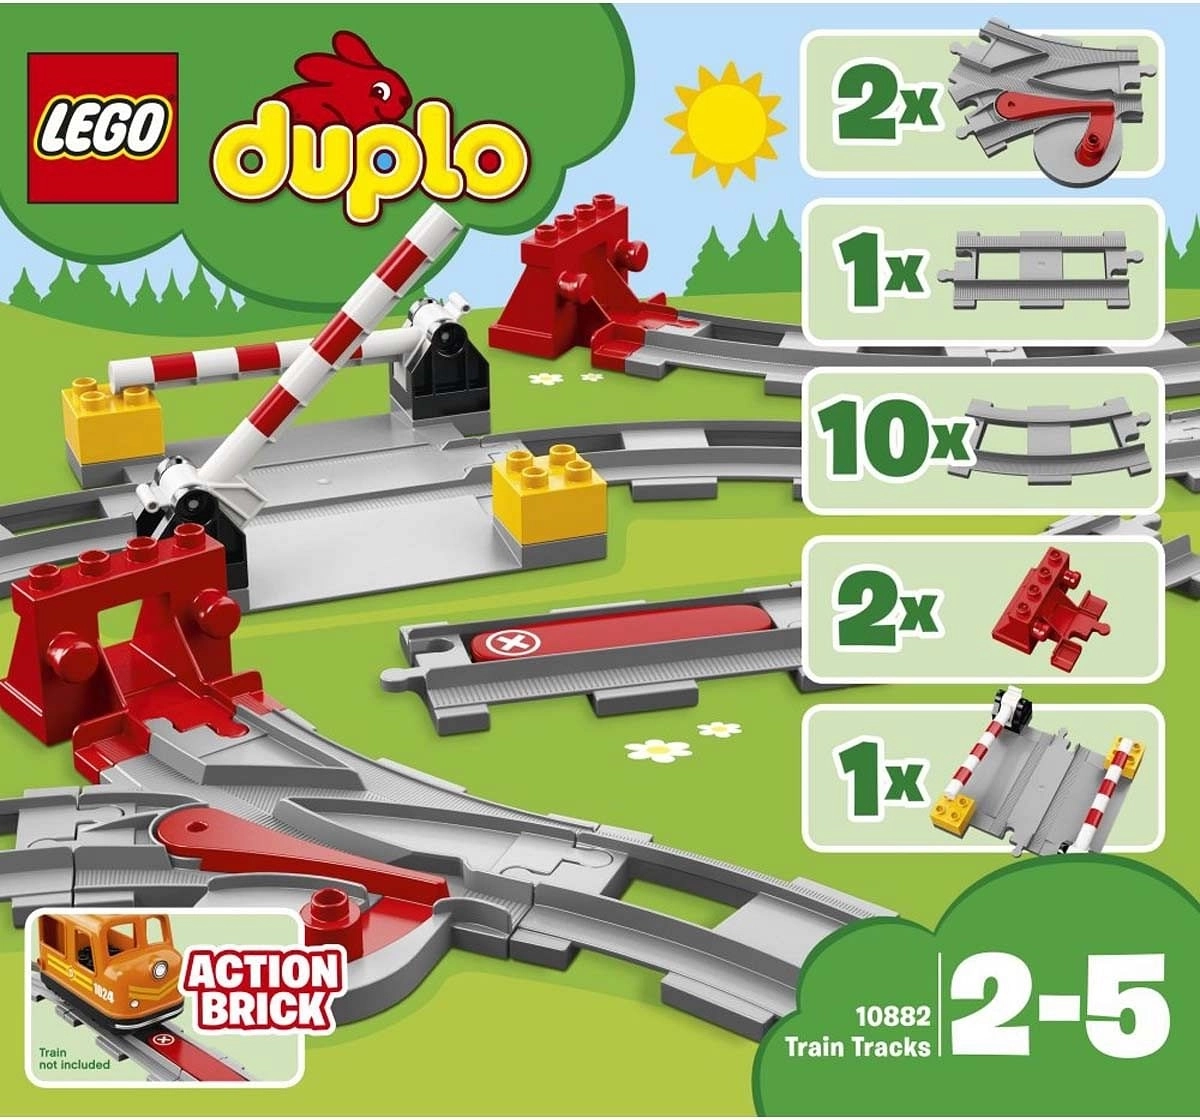 LEGO Train Tracks Set 10882 Instructions